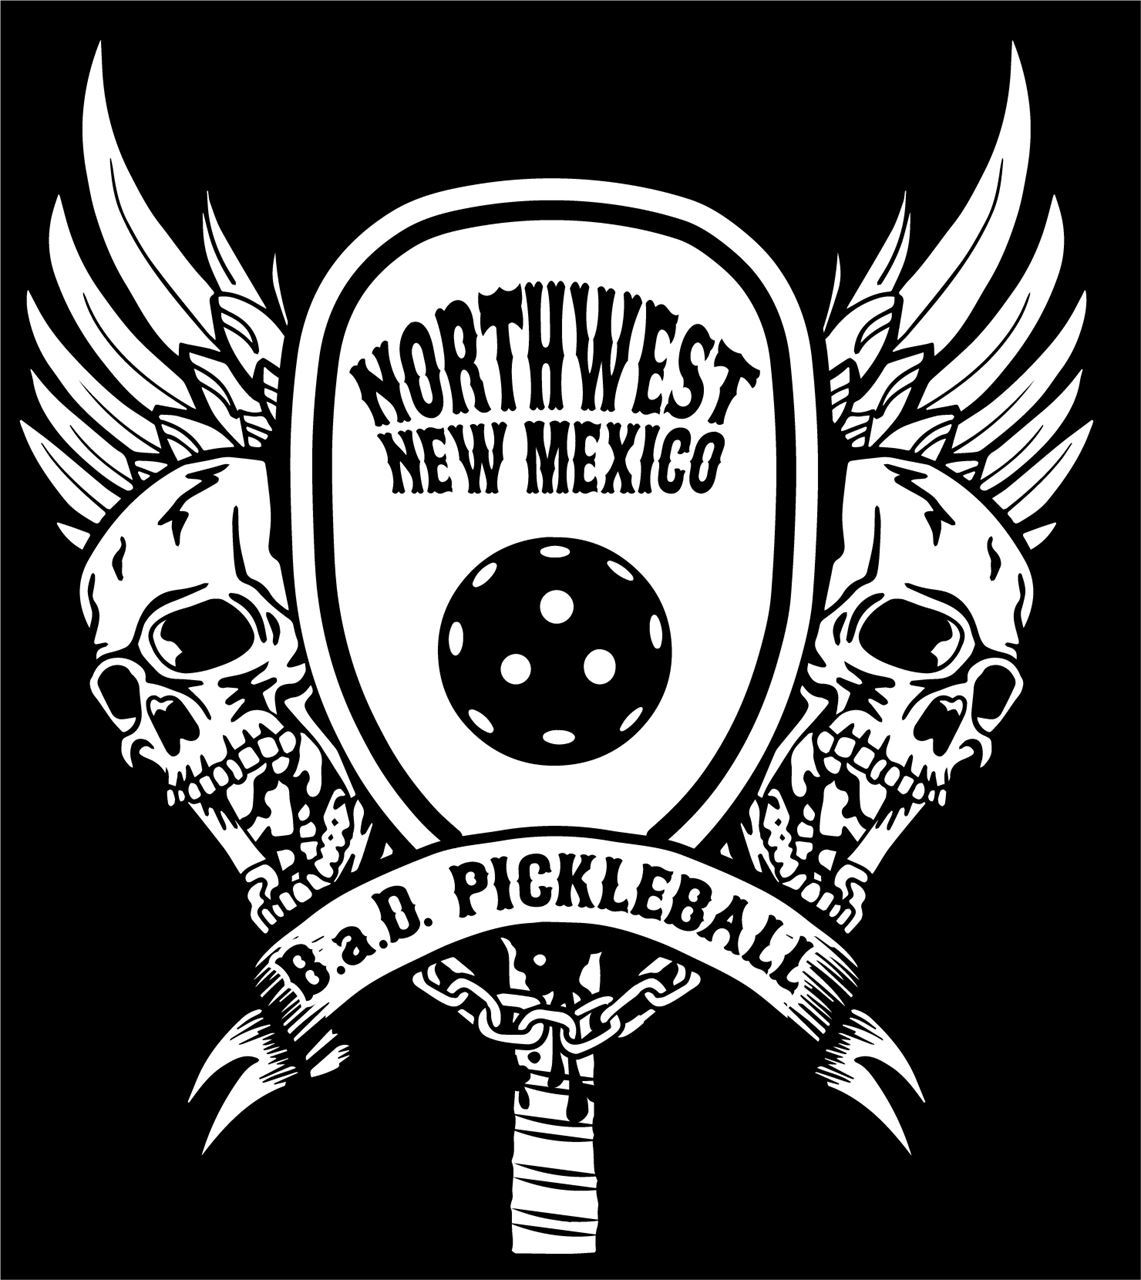 Northwest New Mexico Pickleball Club logo